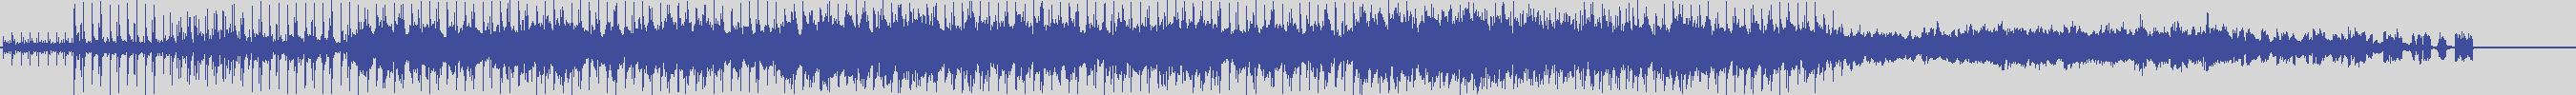 upr [UPR019] Adan, Ilse - Red Star [Original Mix] audio wave form